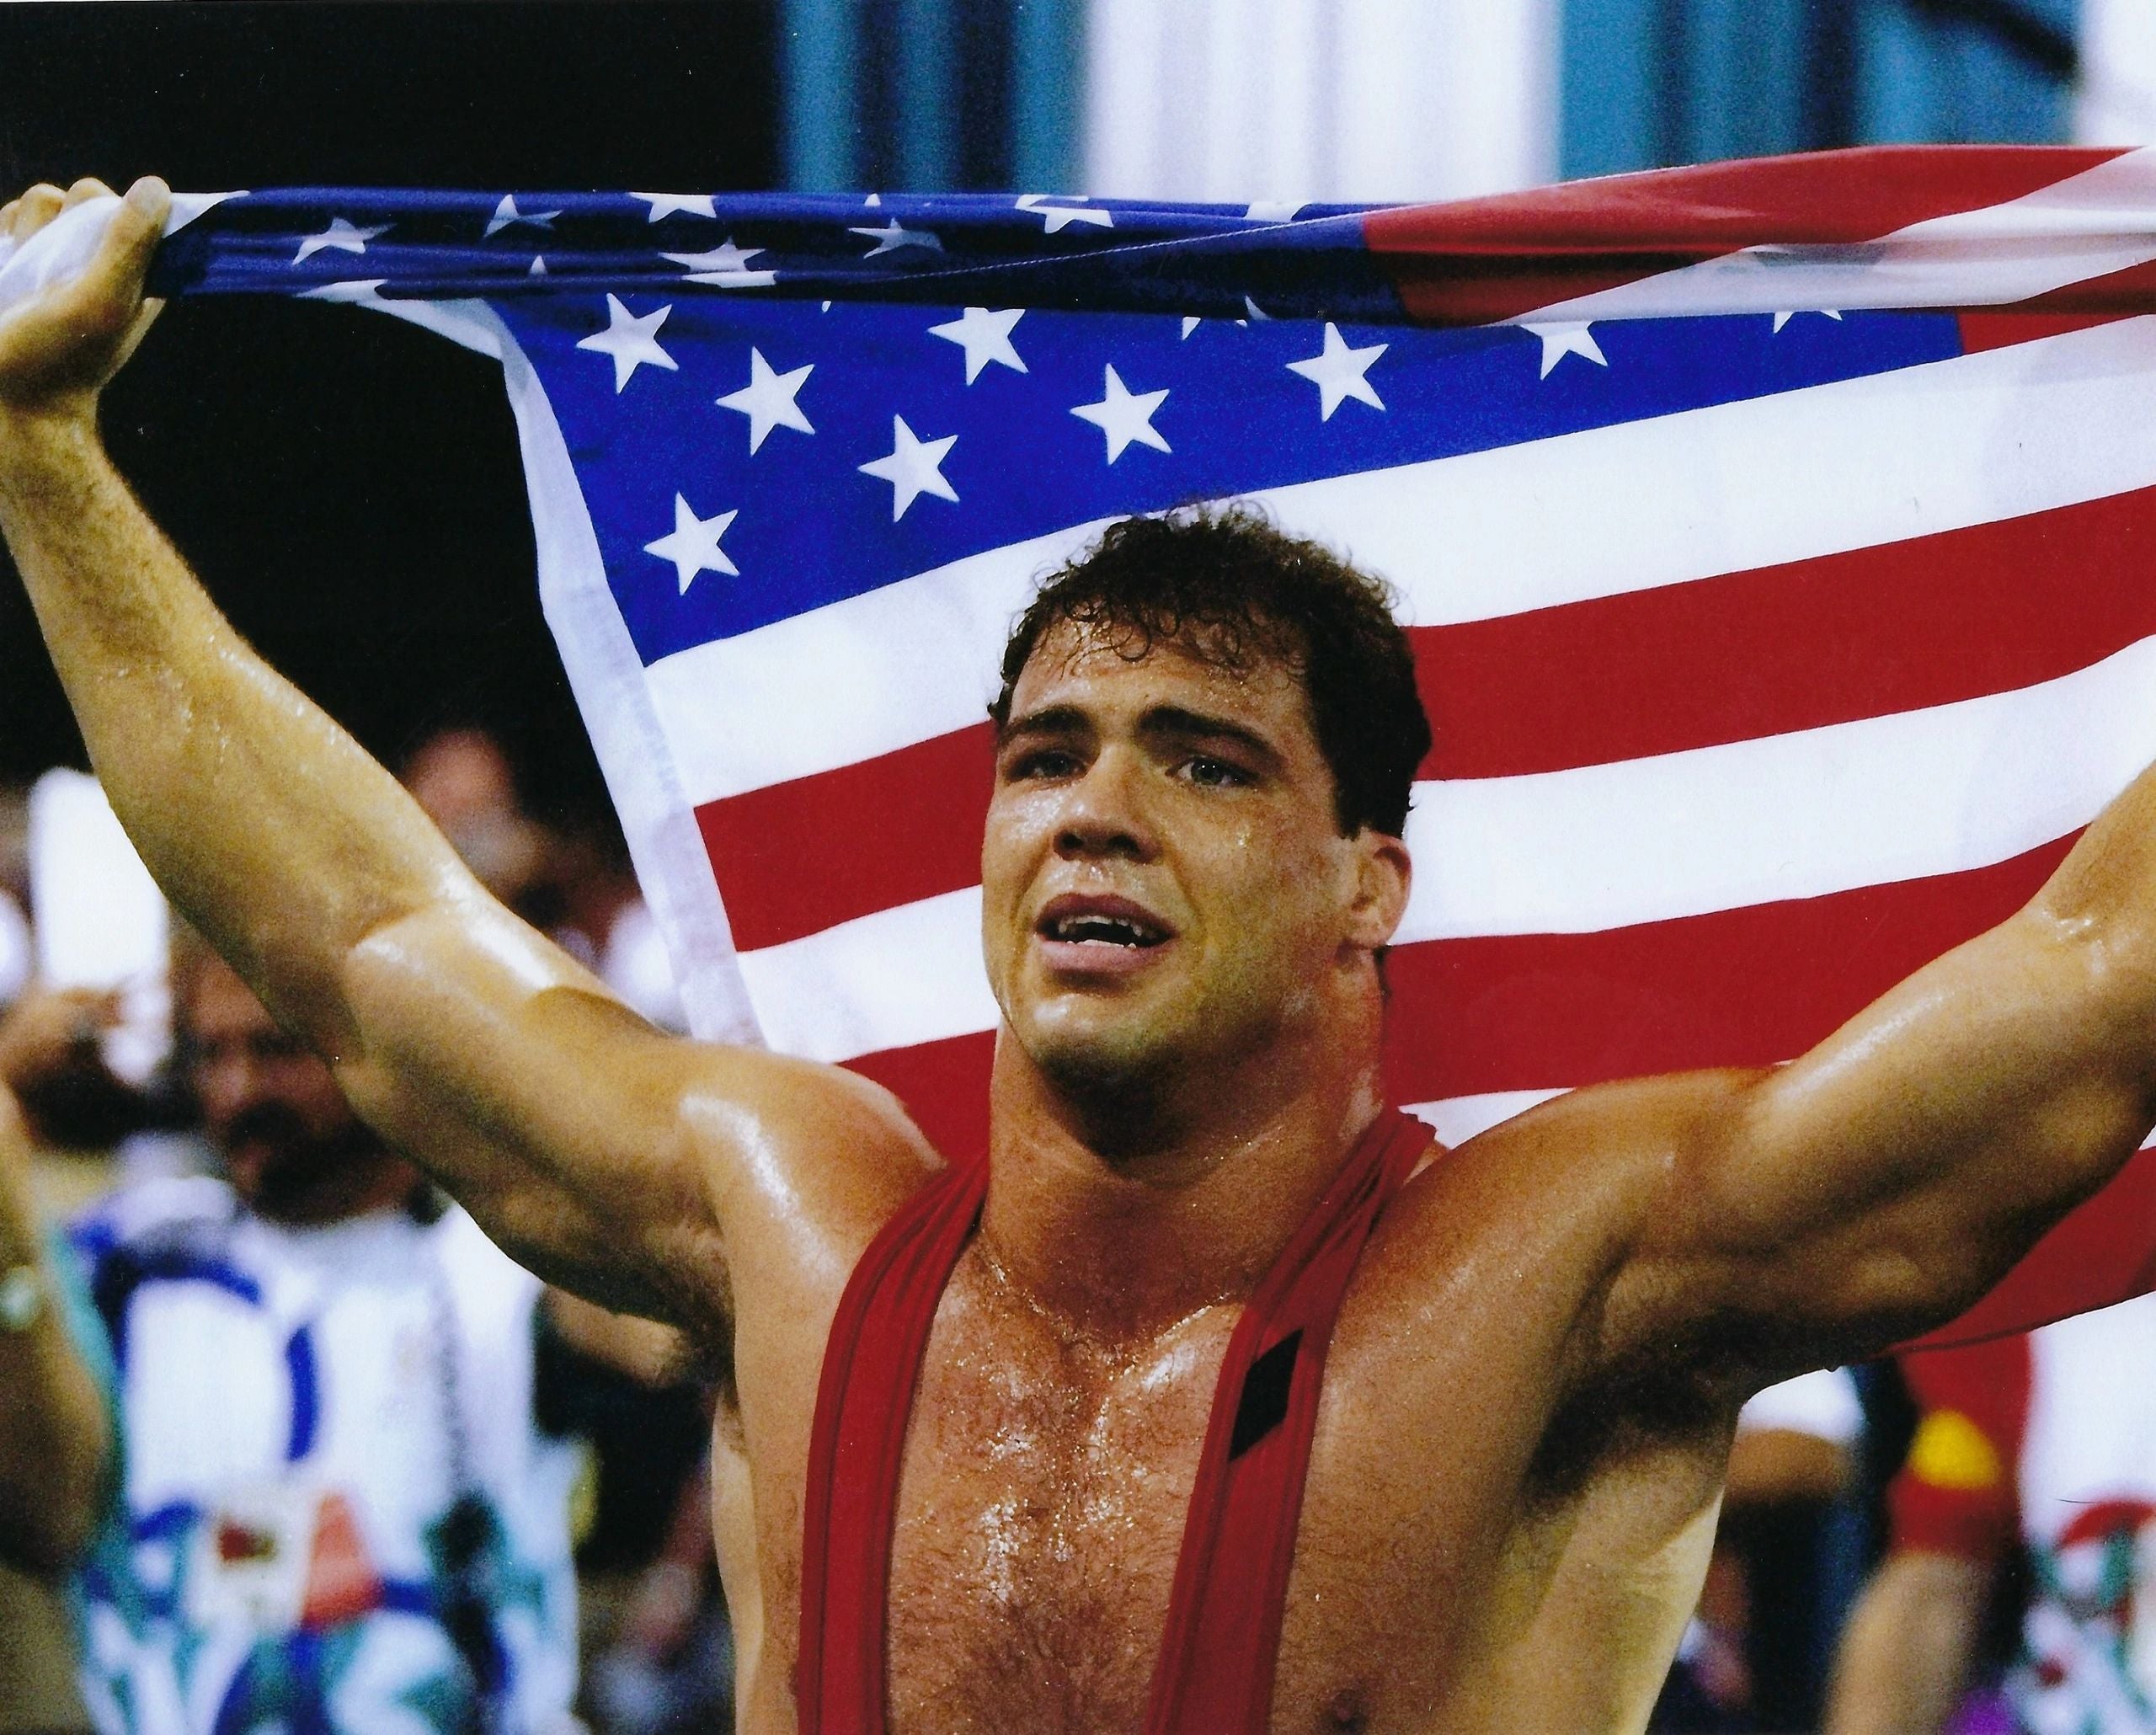 Kurt Angle Signed 8x10 Photo American Flag stretched over shoulders W/JSA COA